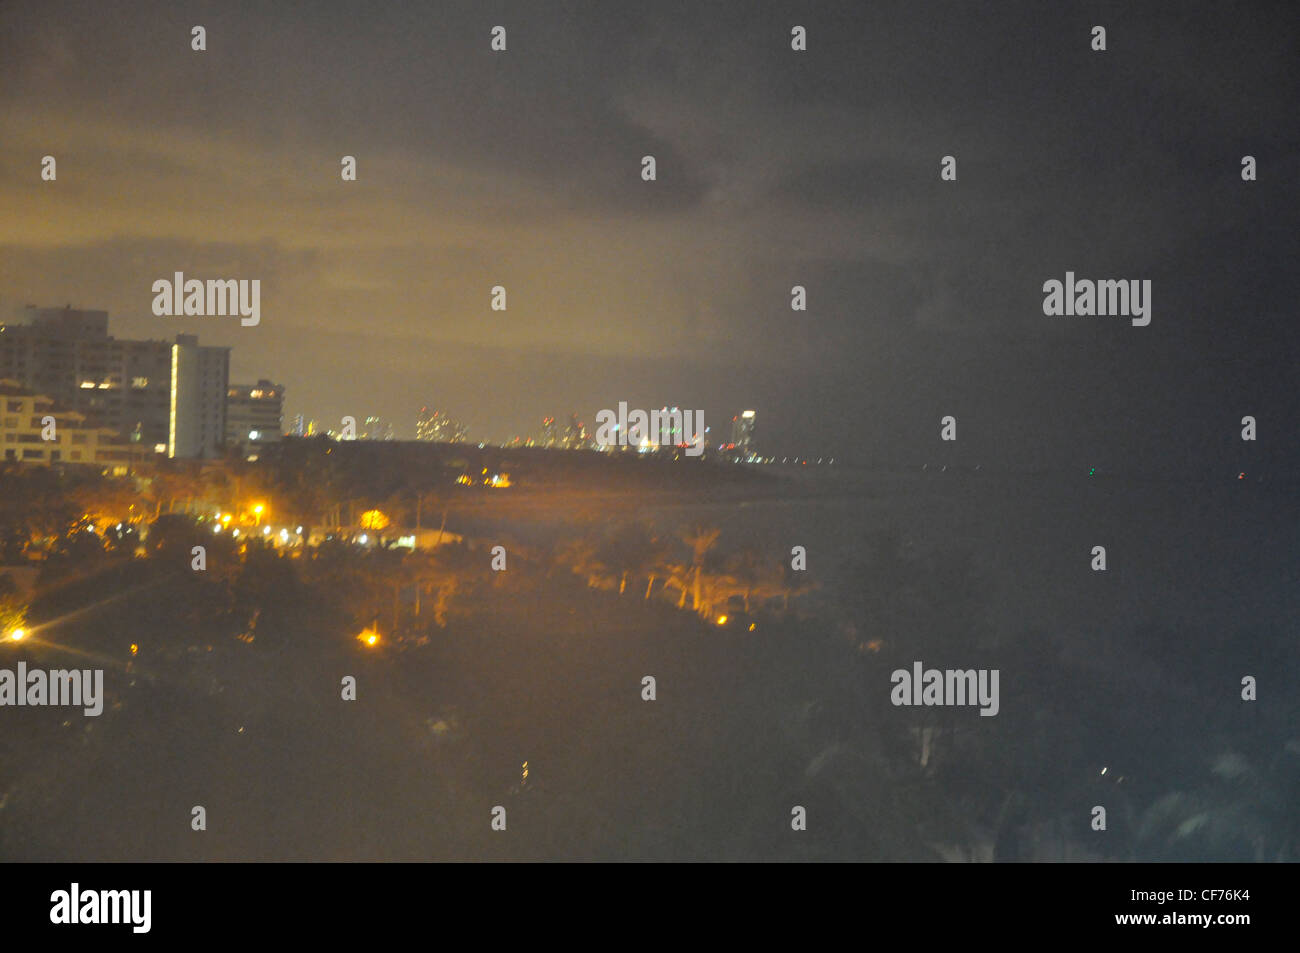 Miami misty landscape midnight exotic drama night sky Stock Photo